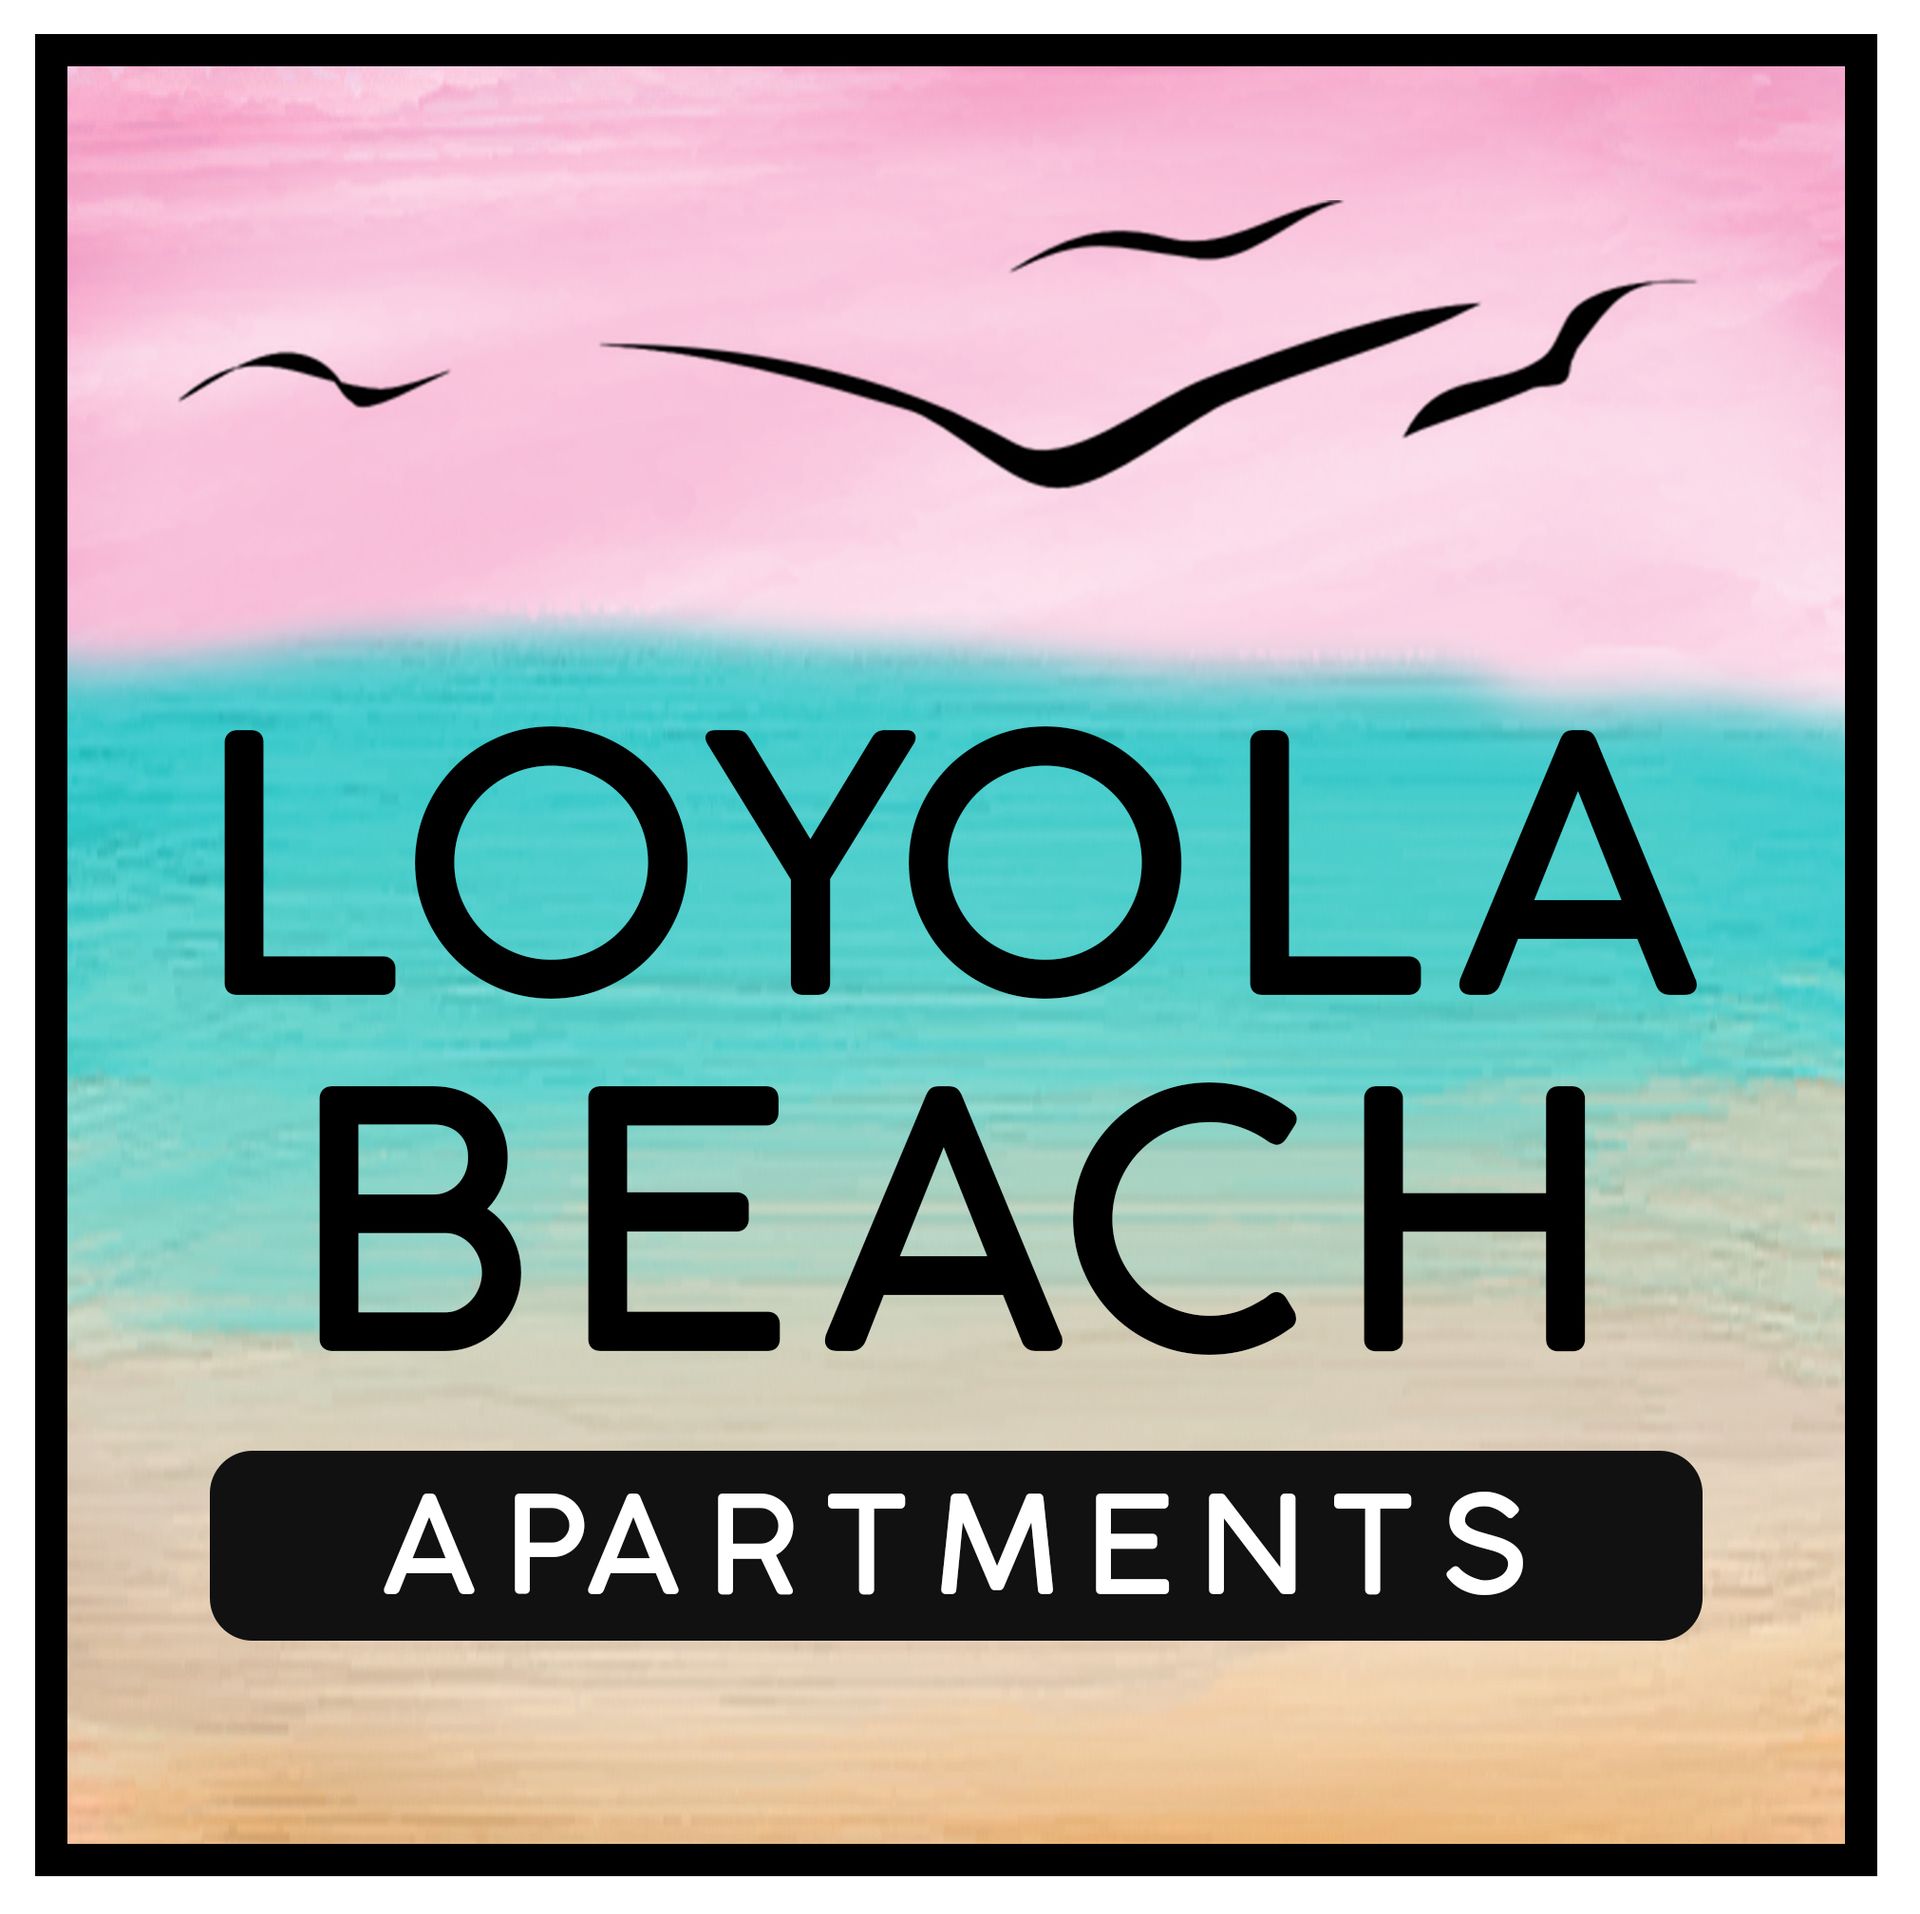 Loyola Beach Apartments